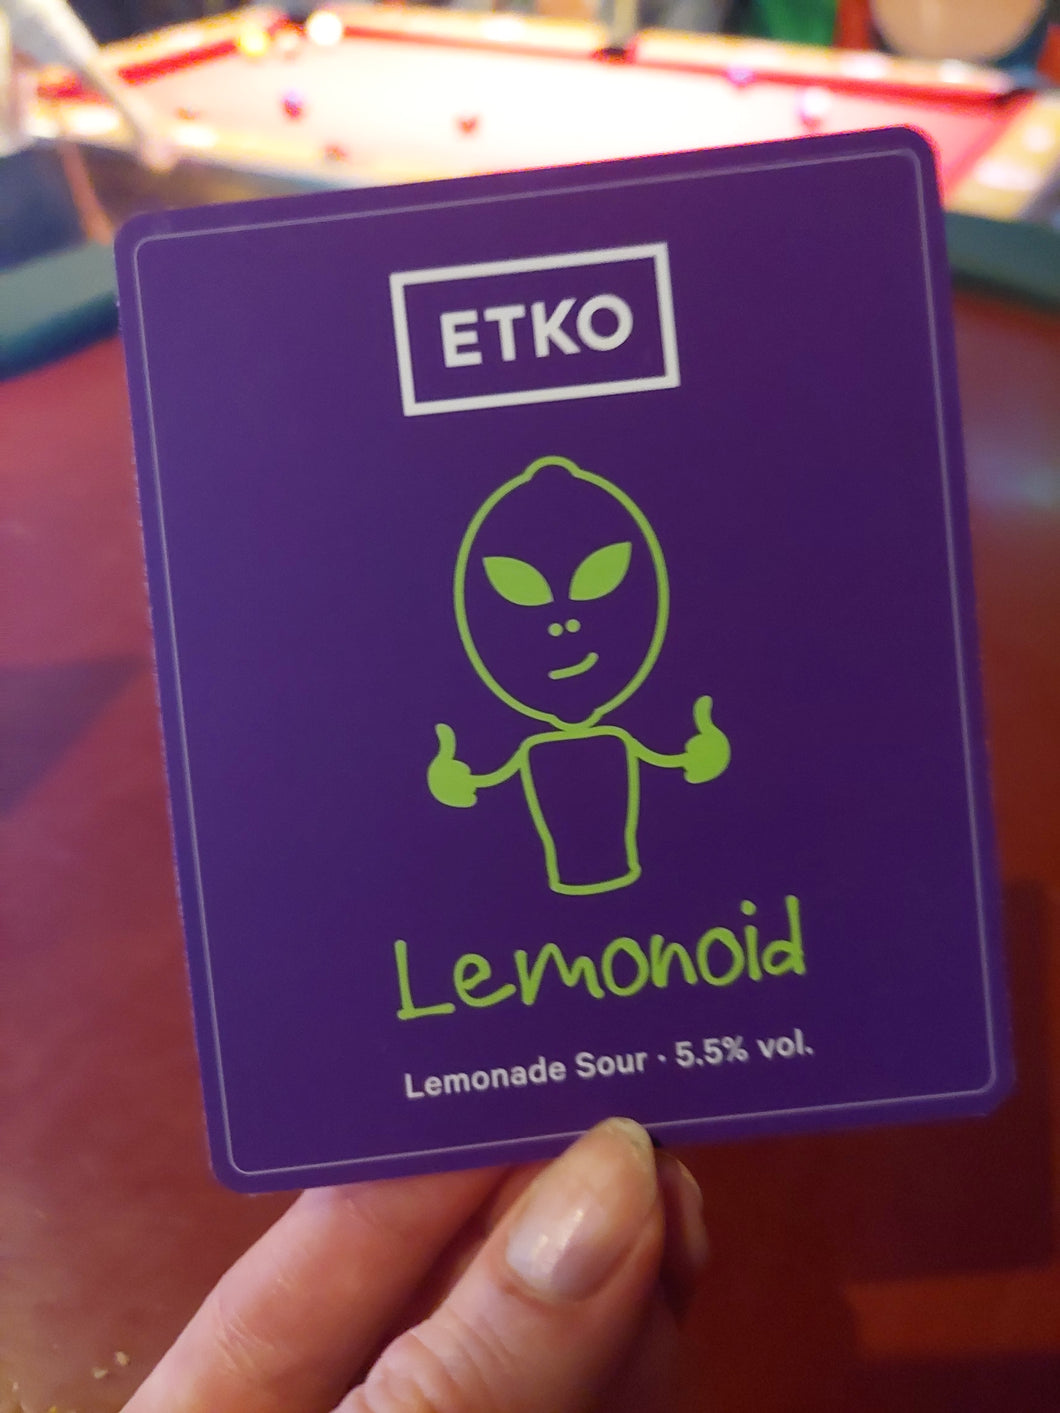 ETKO Brewing Lemonoid